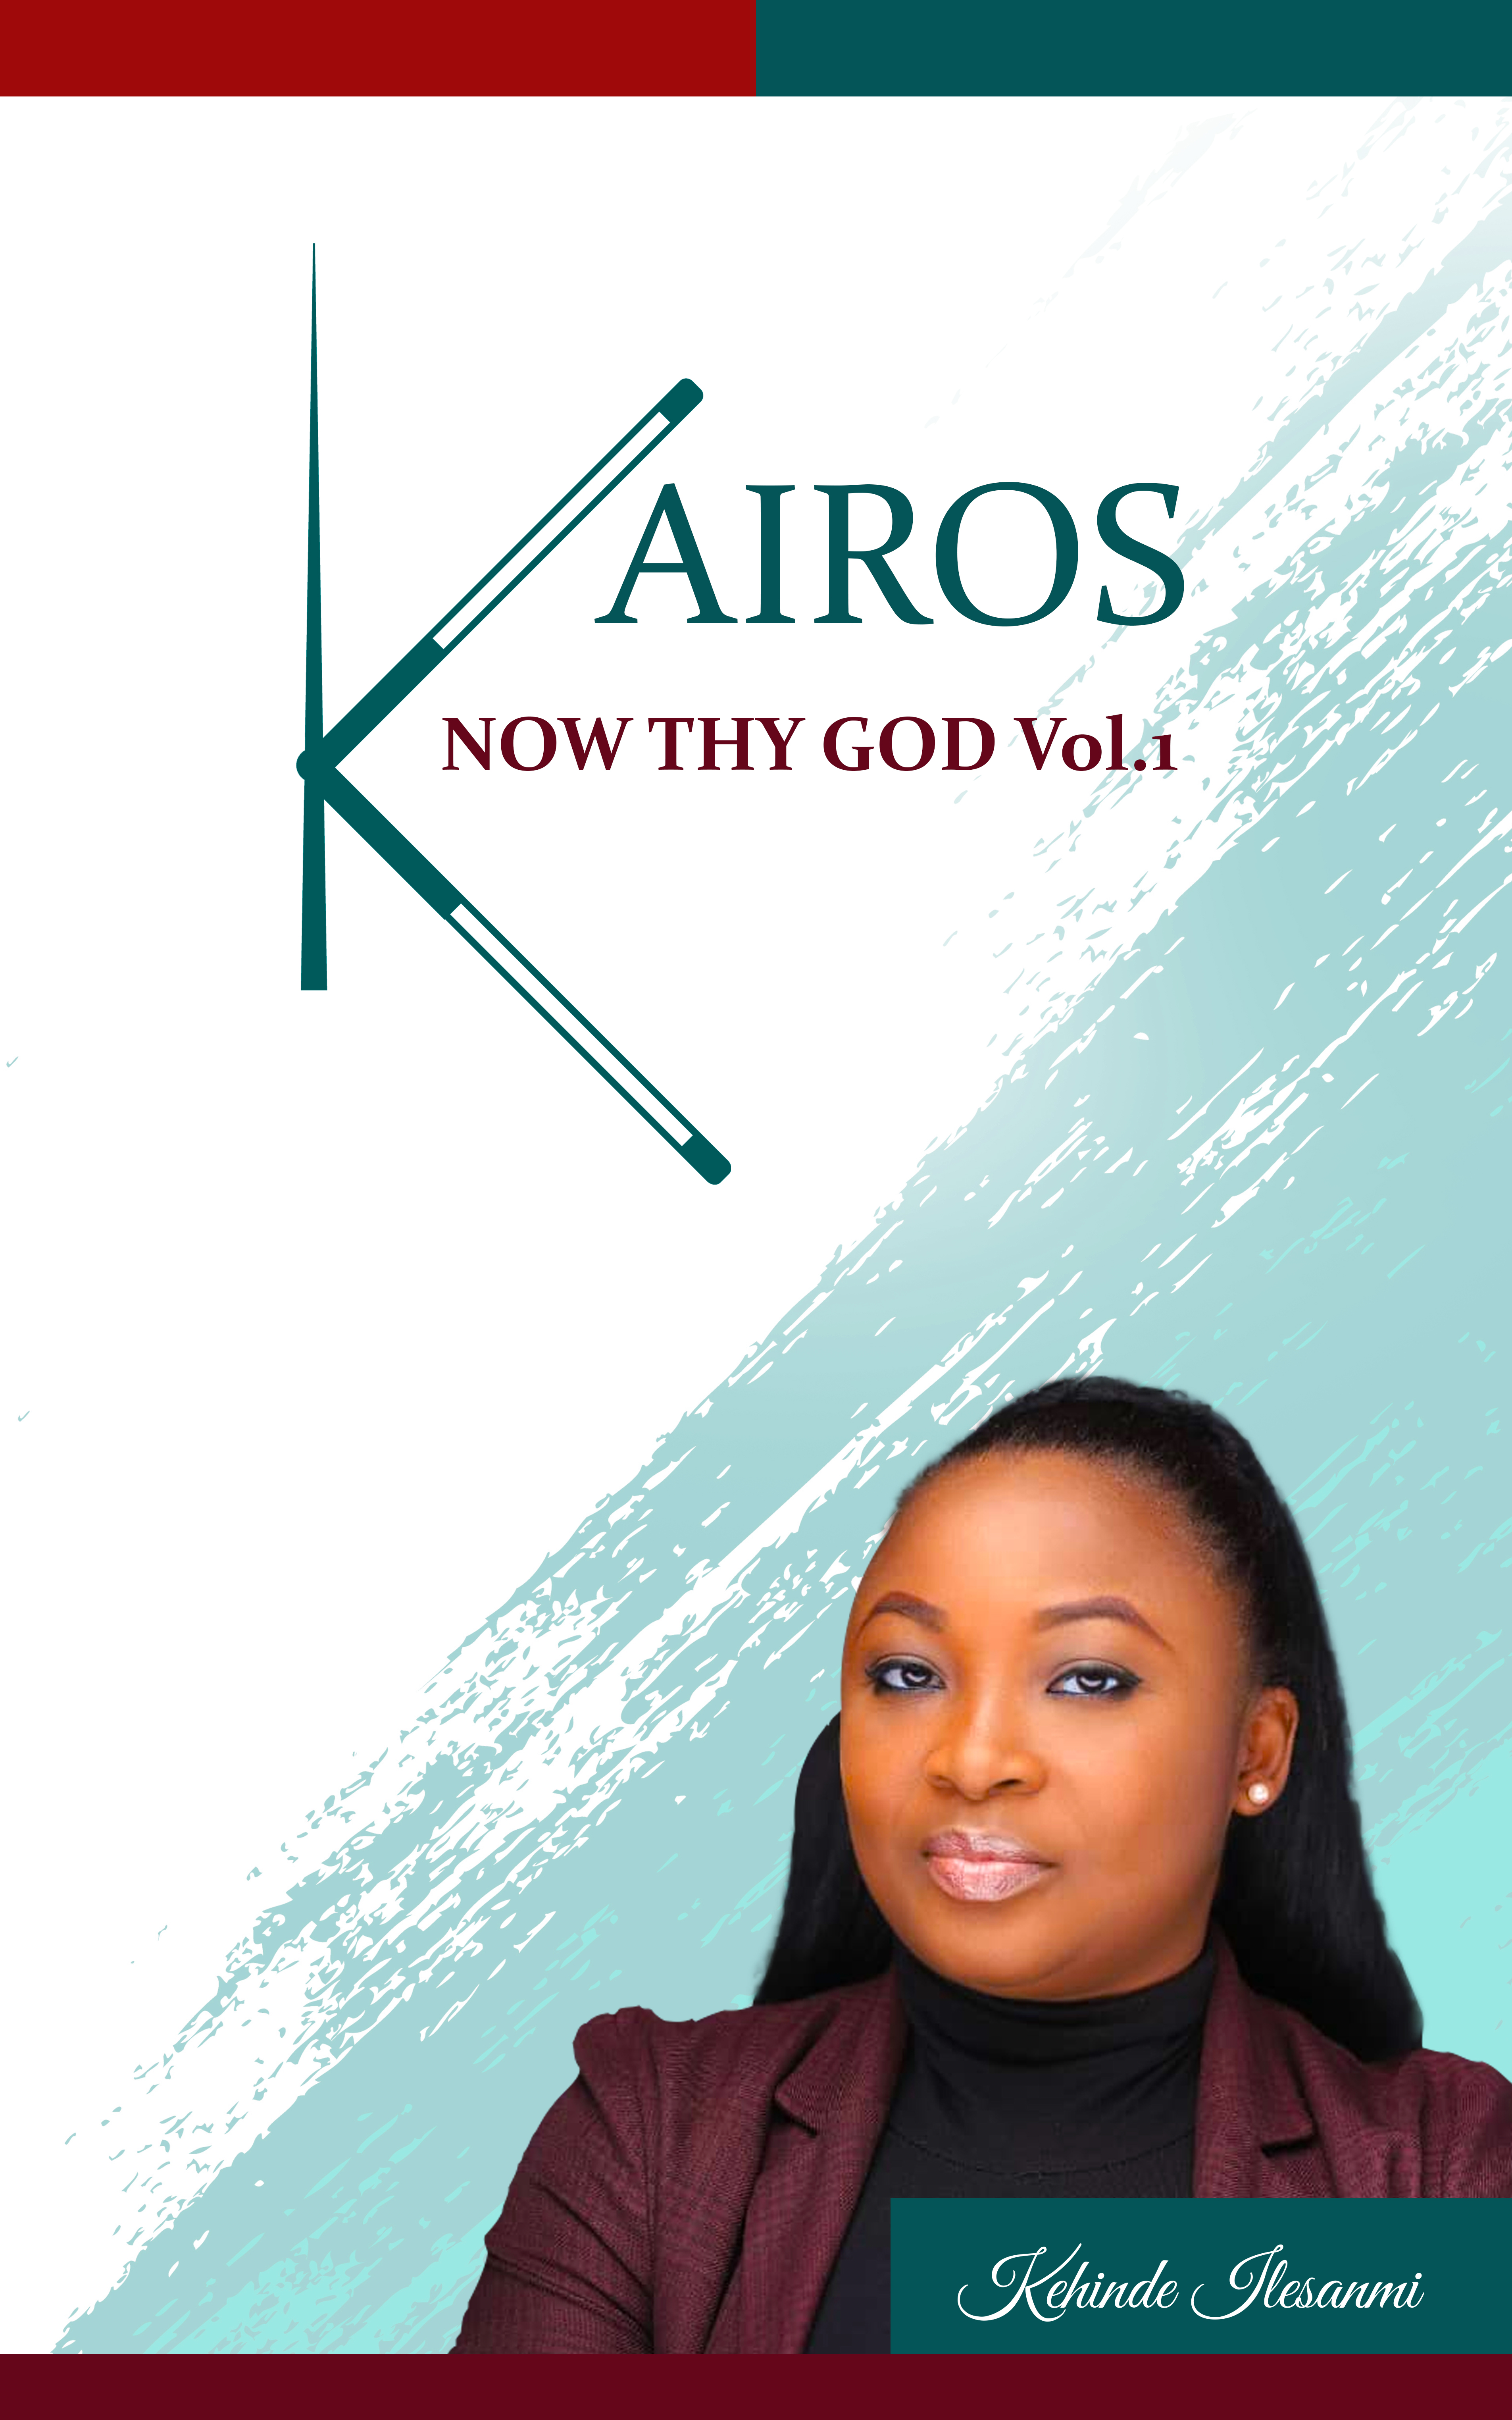 Kairos---Know-Thy-God-Vol-1-